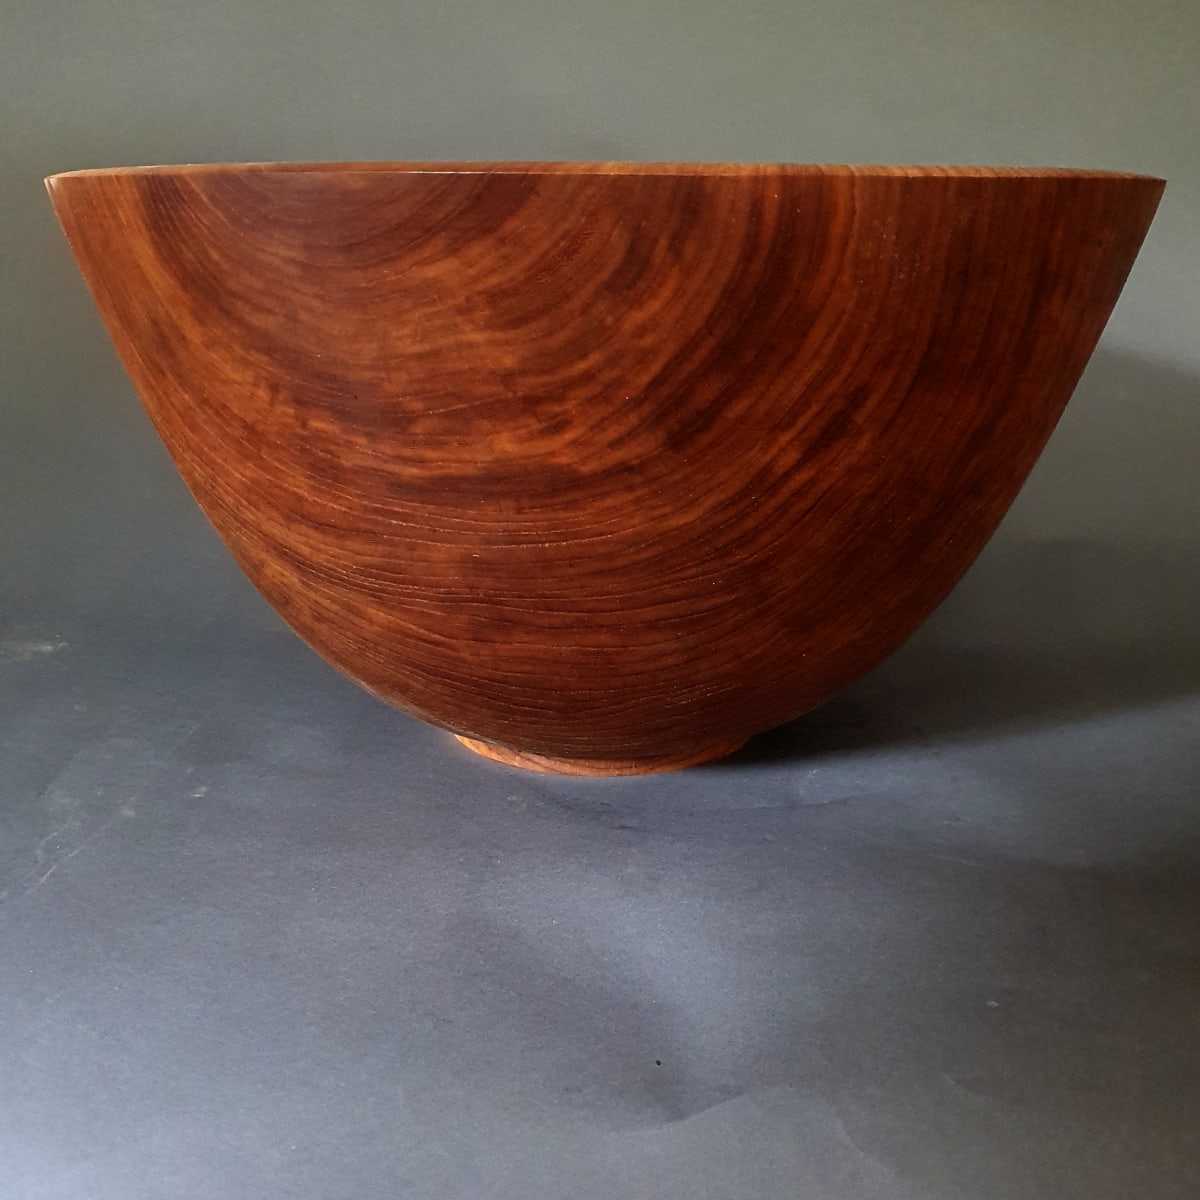 elm bowl 2021_3 by Simon King  Image: Large elm bowl